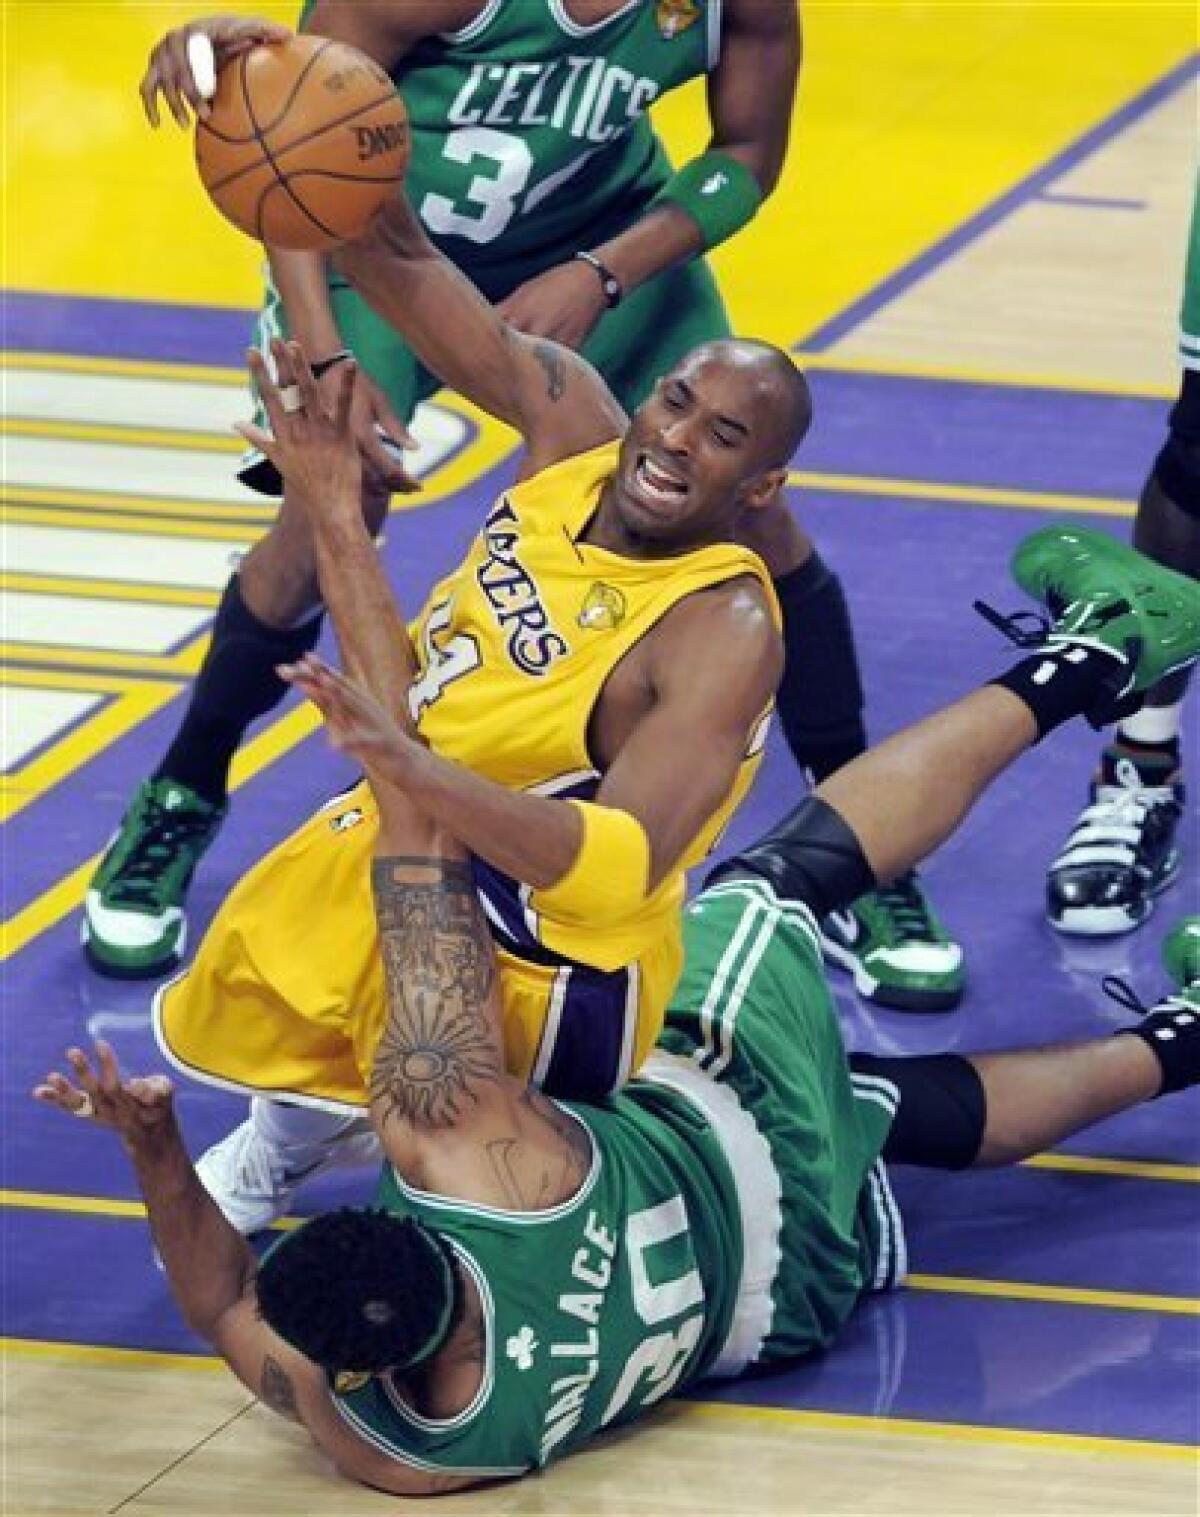 Lakers beat Celtics 83-79 to win 16th NBA championship